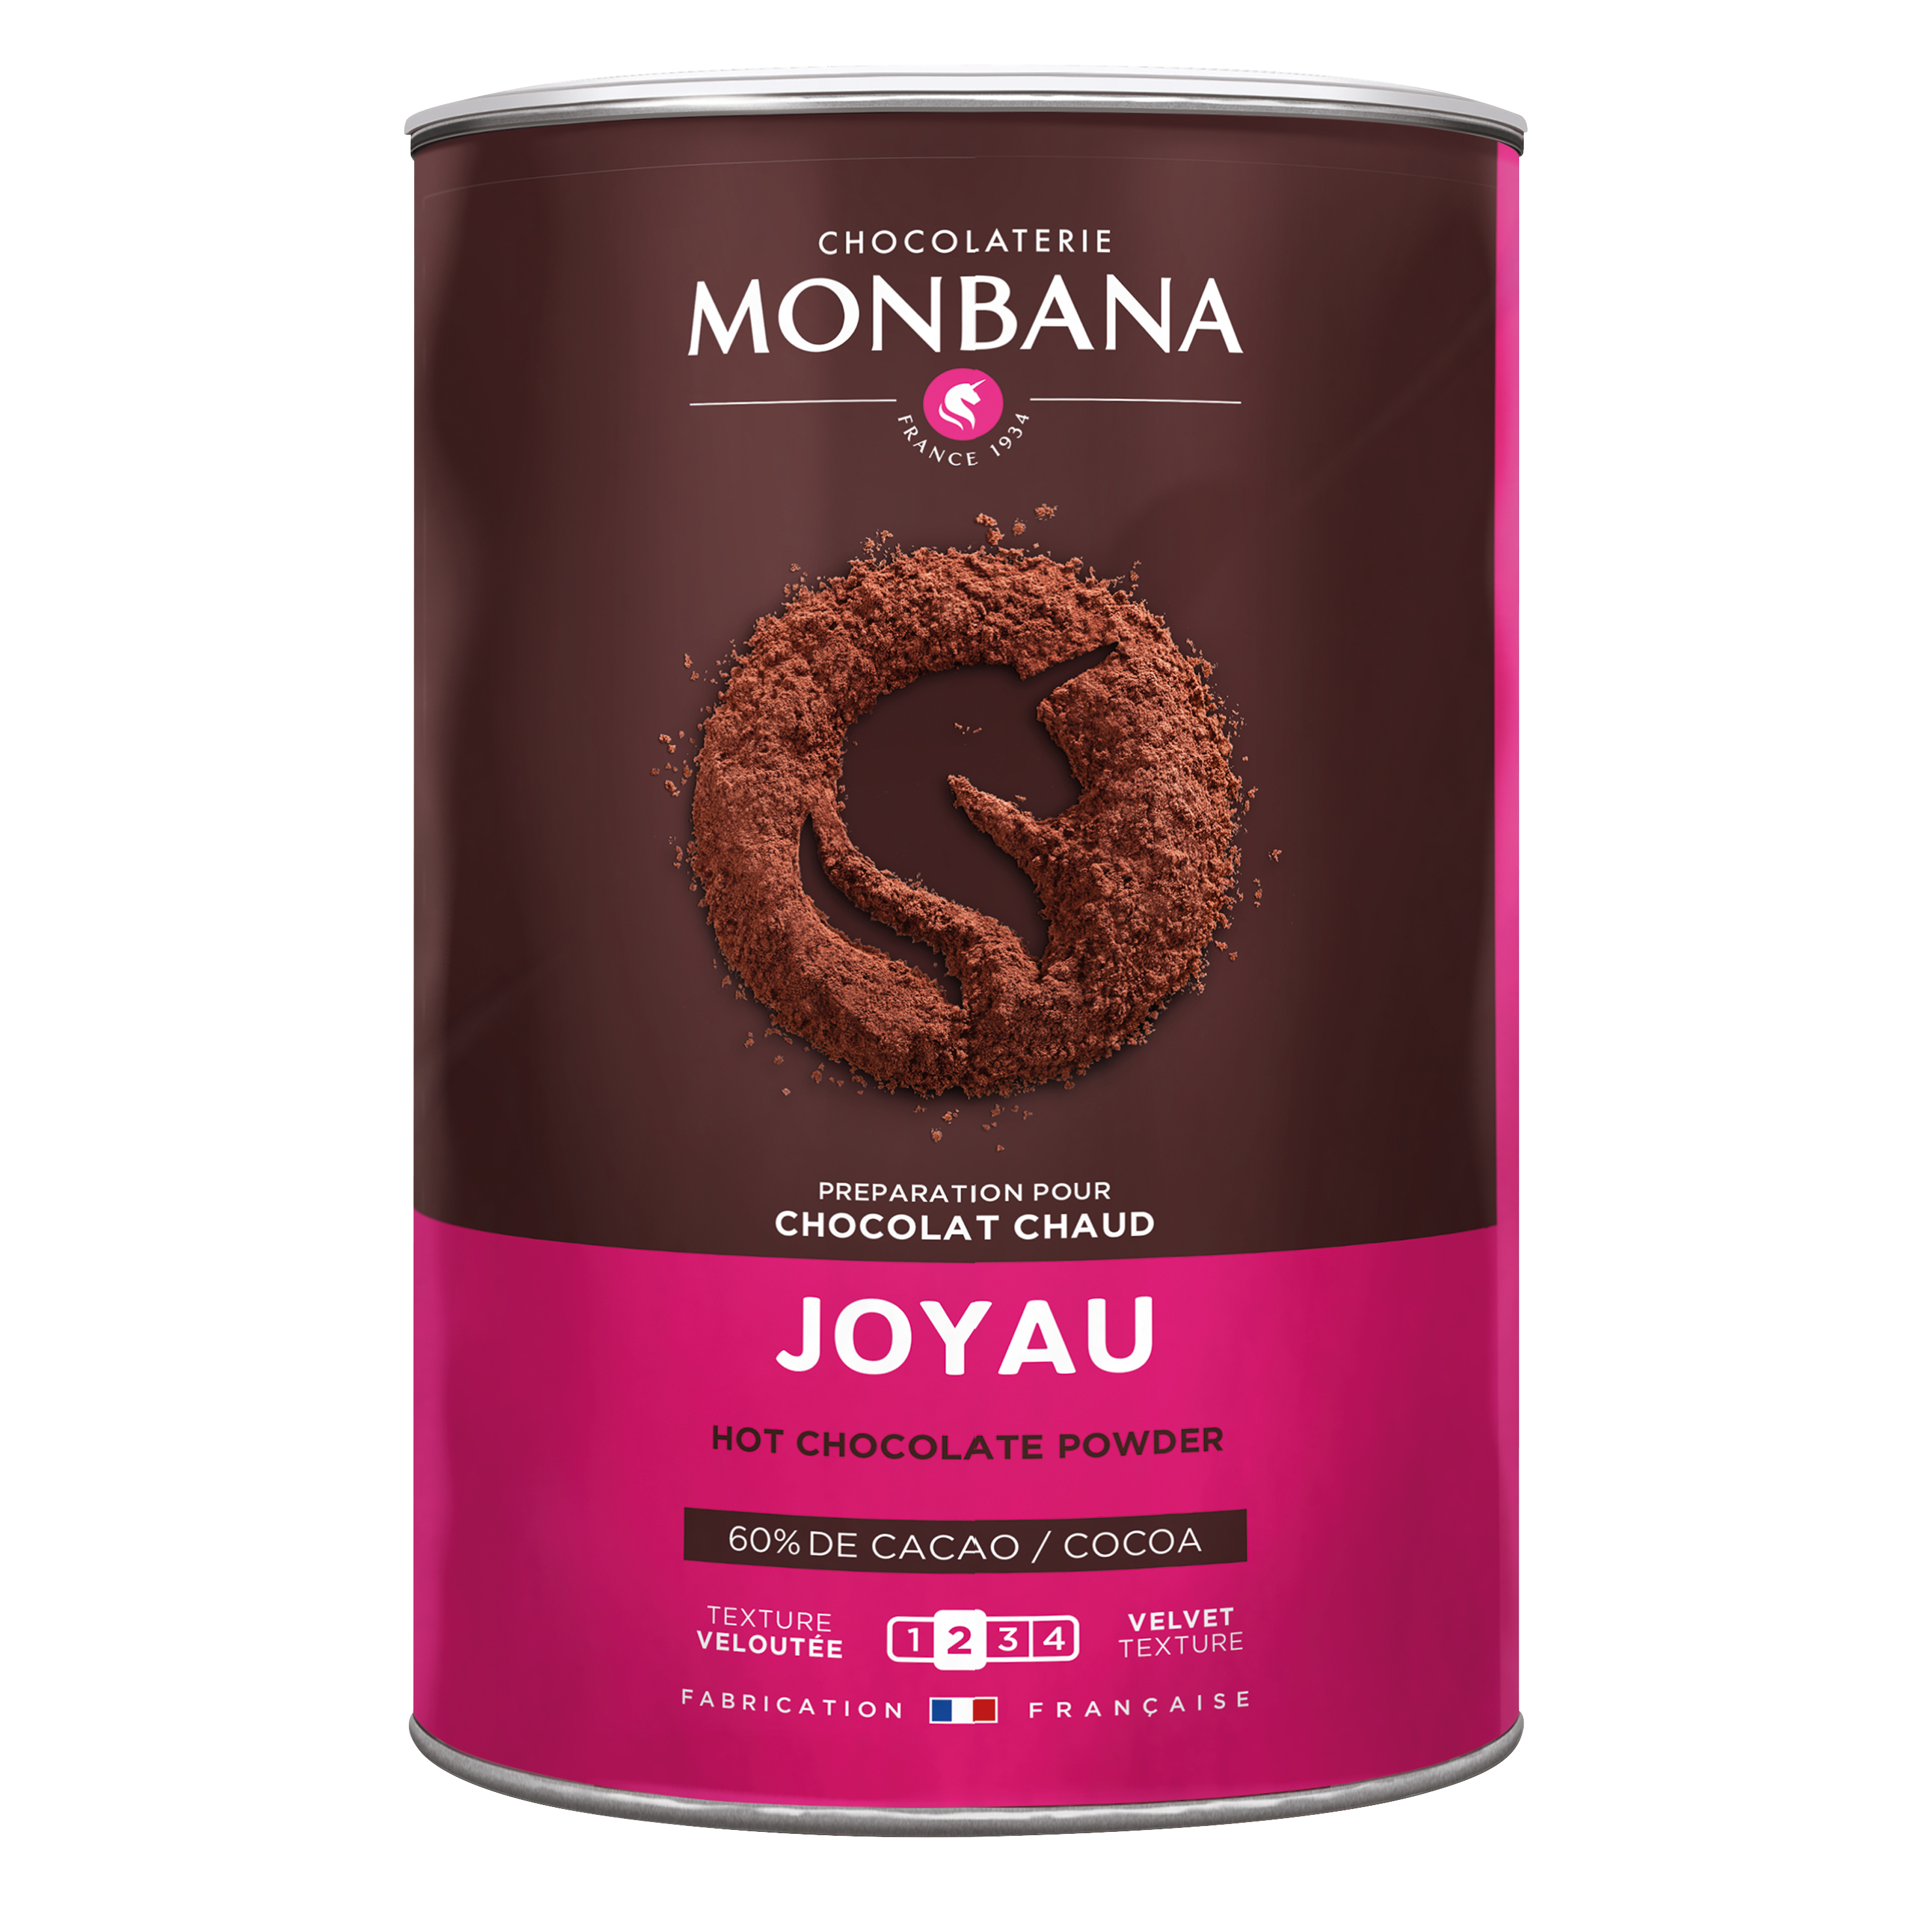 »Joyau« Chocolate Powder